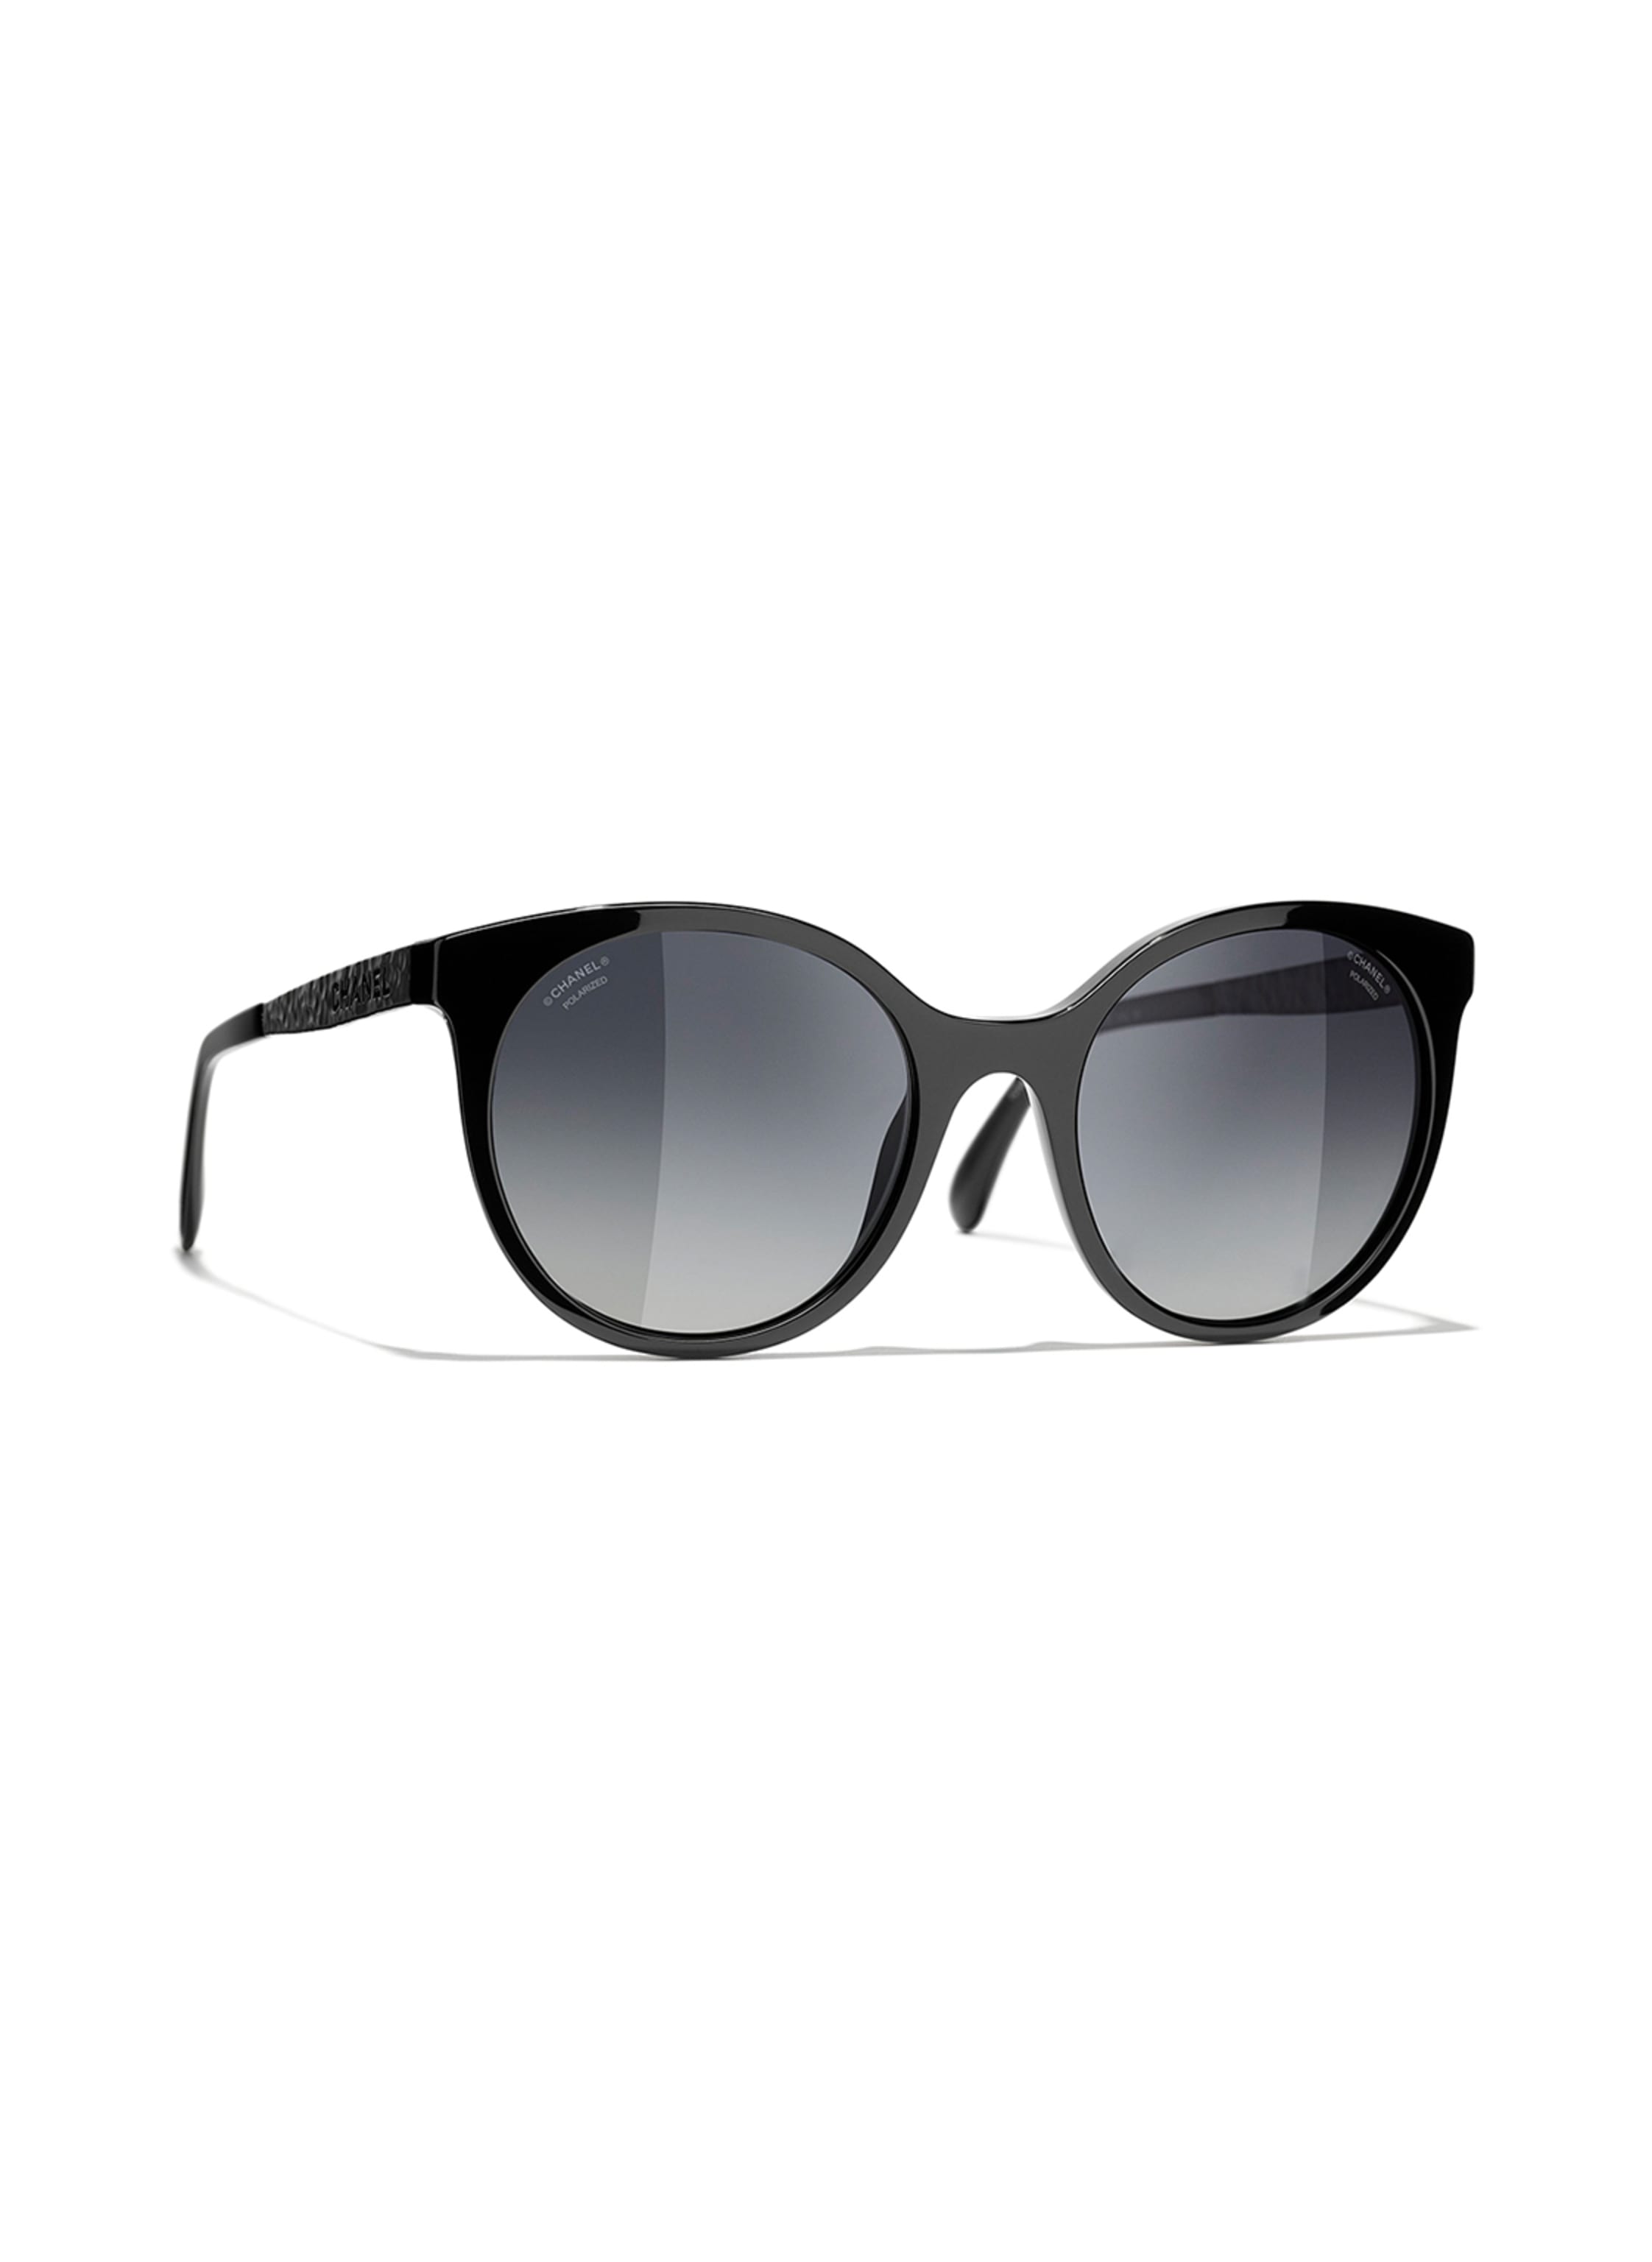 Chanel Square Sunglasses CH5380 56 Brown  Dark Tortoise Sunglasses   Sunglass Hut Australia